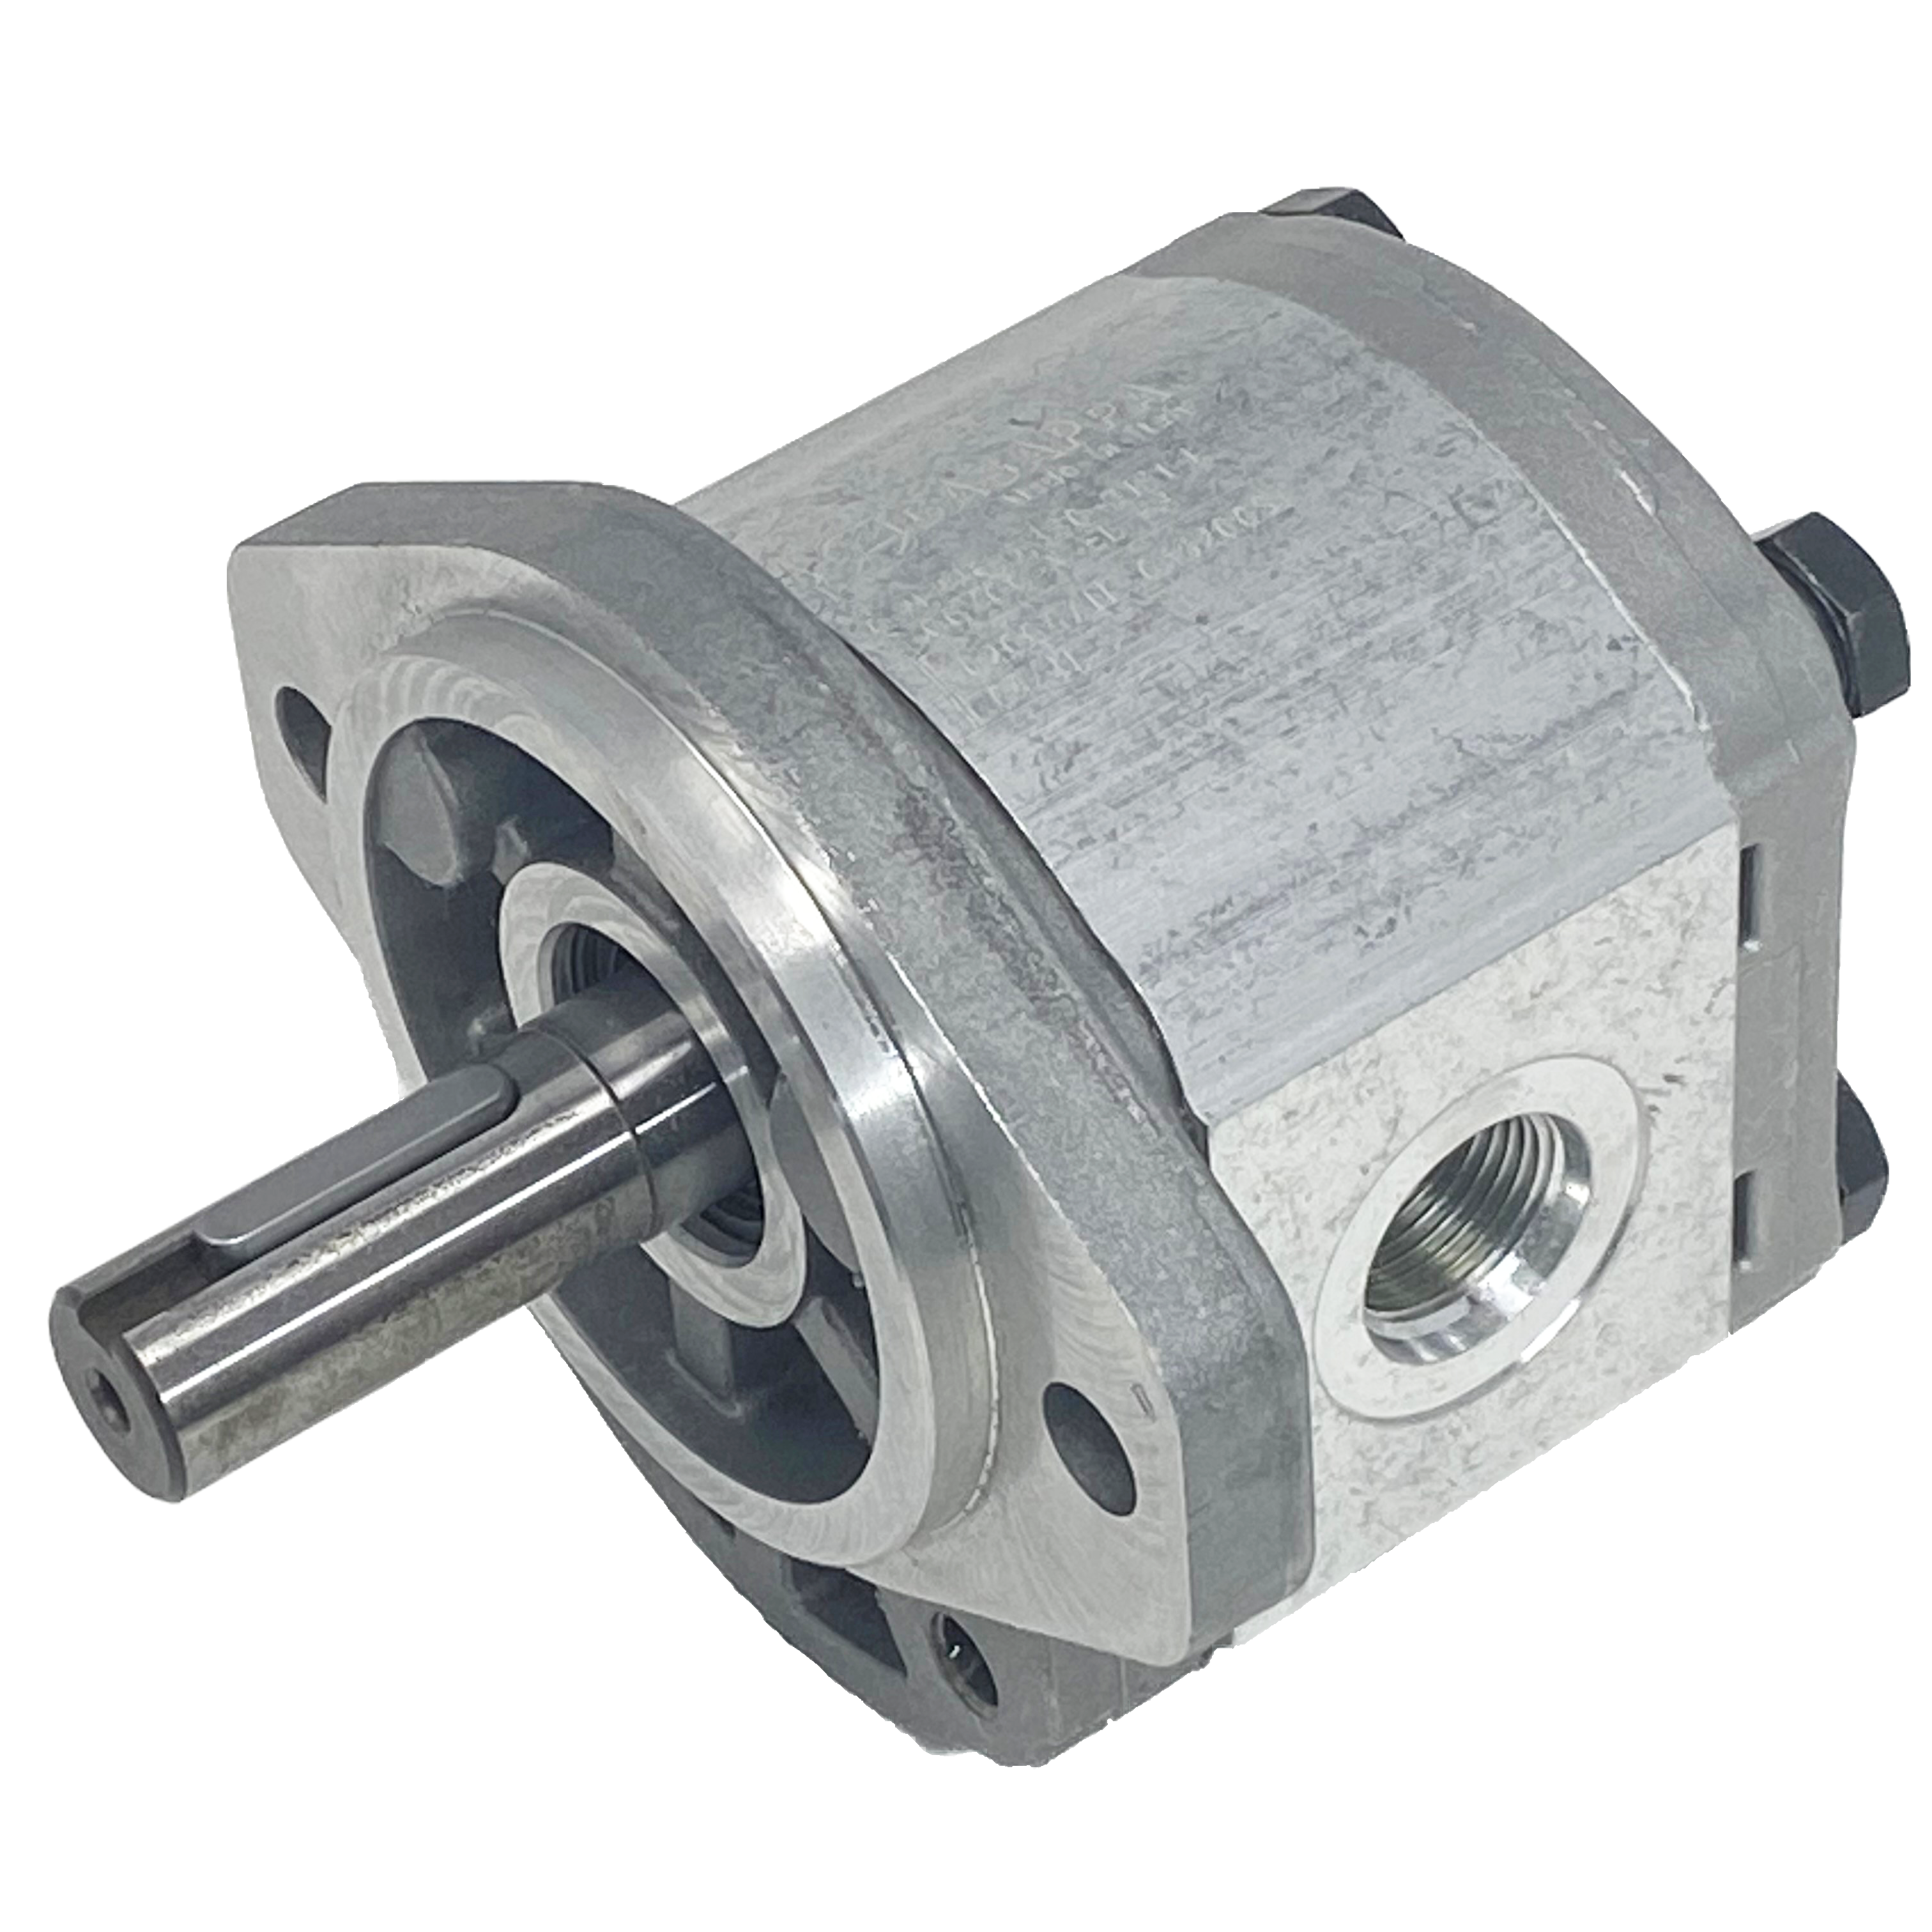 PLM20.8R0-49S1-LOC/OC-N-EL : Casappa Polaris Gear Motor, 8.26cc, 3625psi Rated, 3500RPM, Reversible Rear External Drain, 3/4" Bore x 3/16" Key Shaft, SAE A 2-Bolt Flange, 0.625 (5/8") #10 SAE Inlet, 0.625 (5/8") #10 SAE Outlet, Aluminum Body & Flange